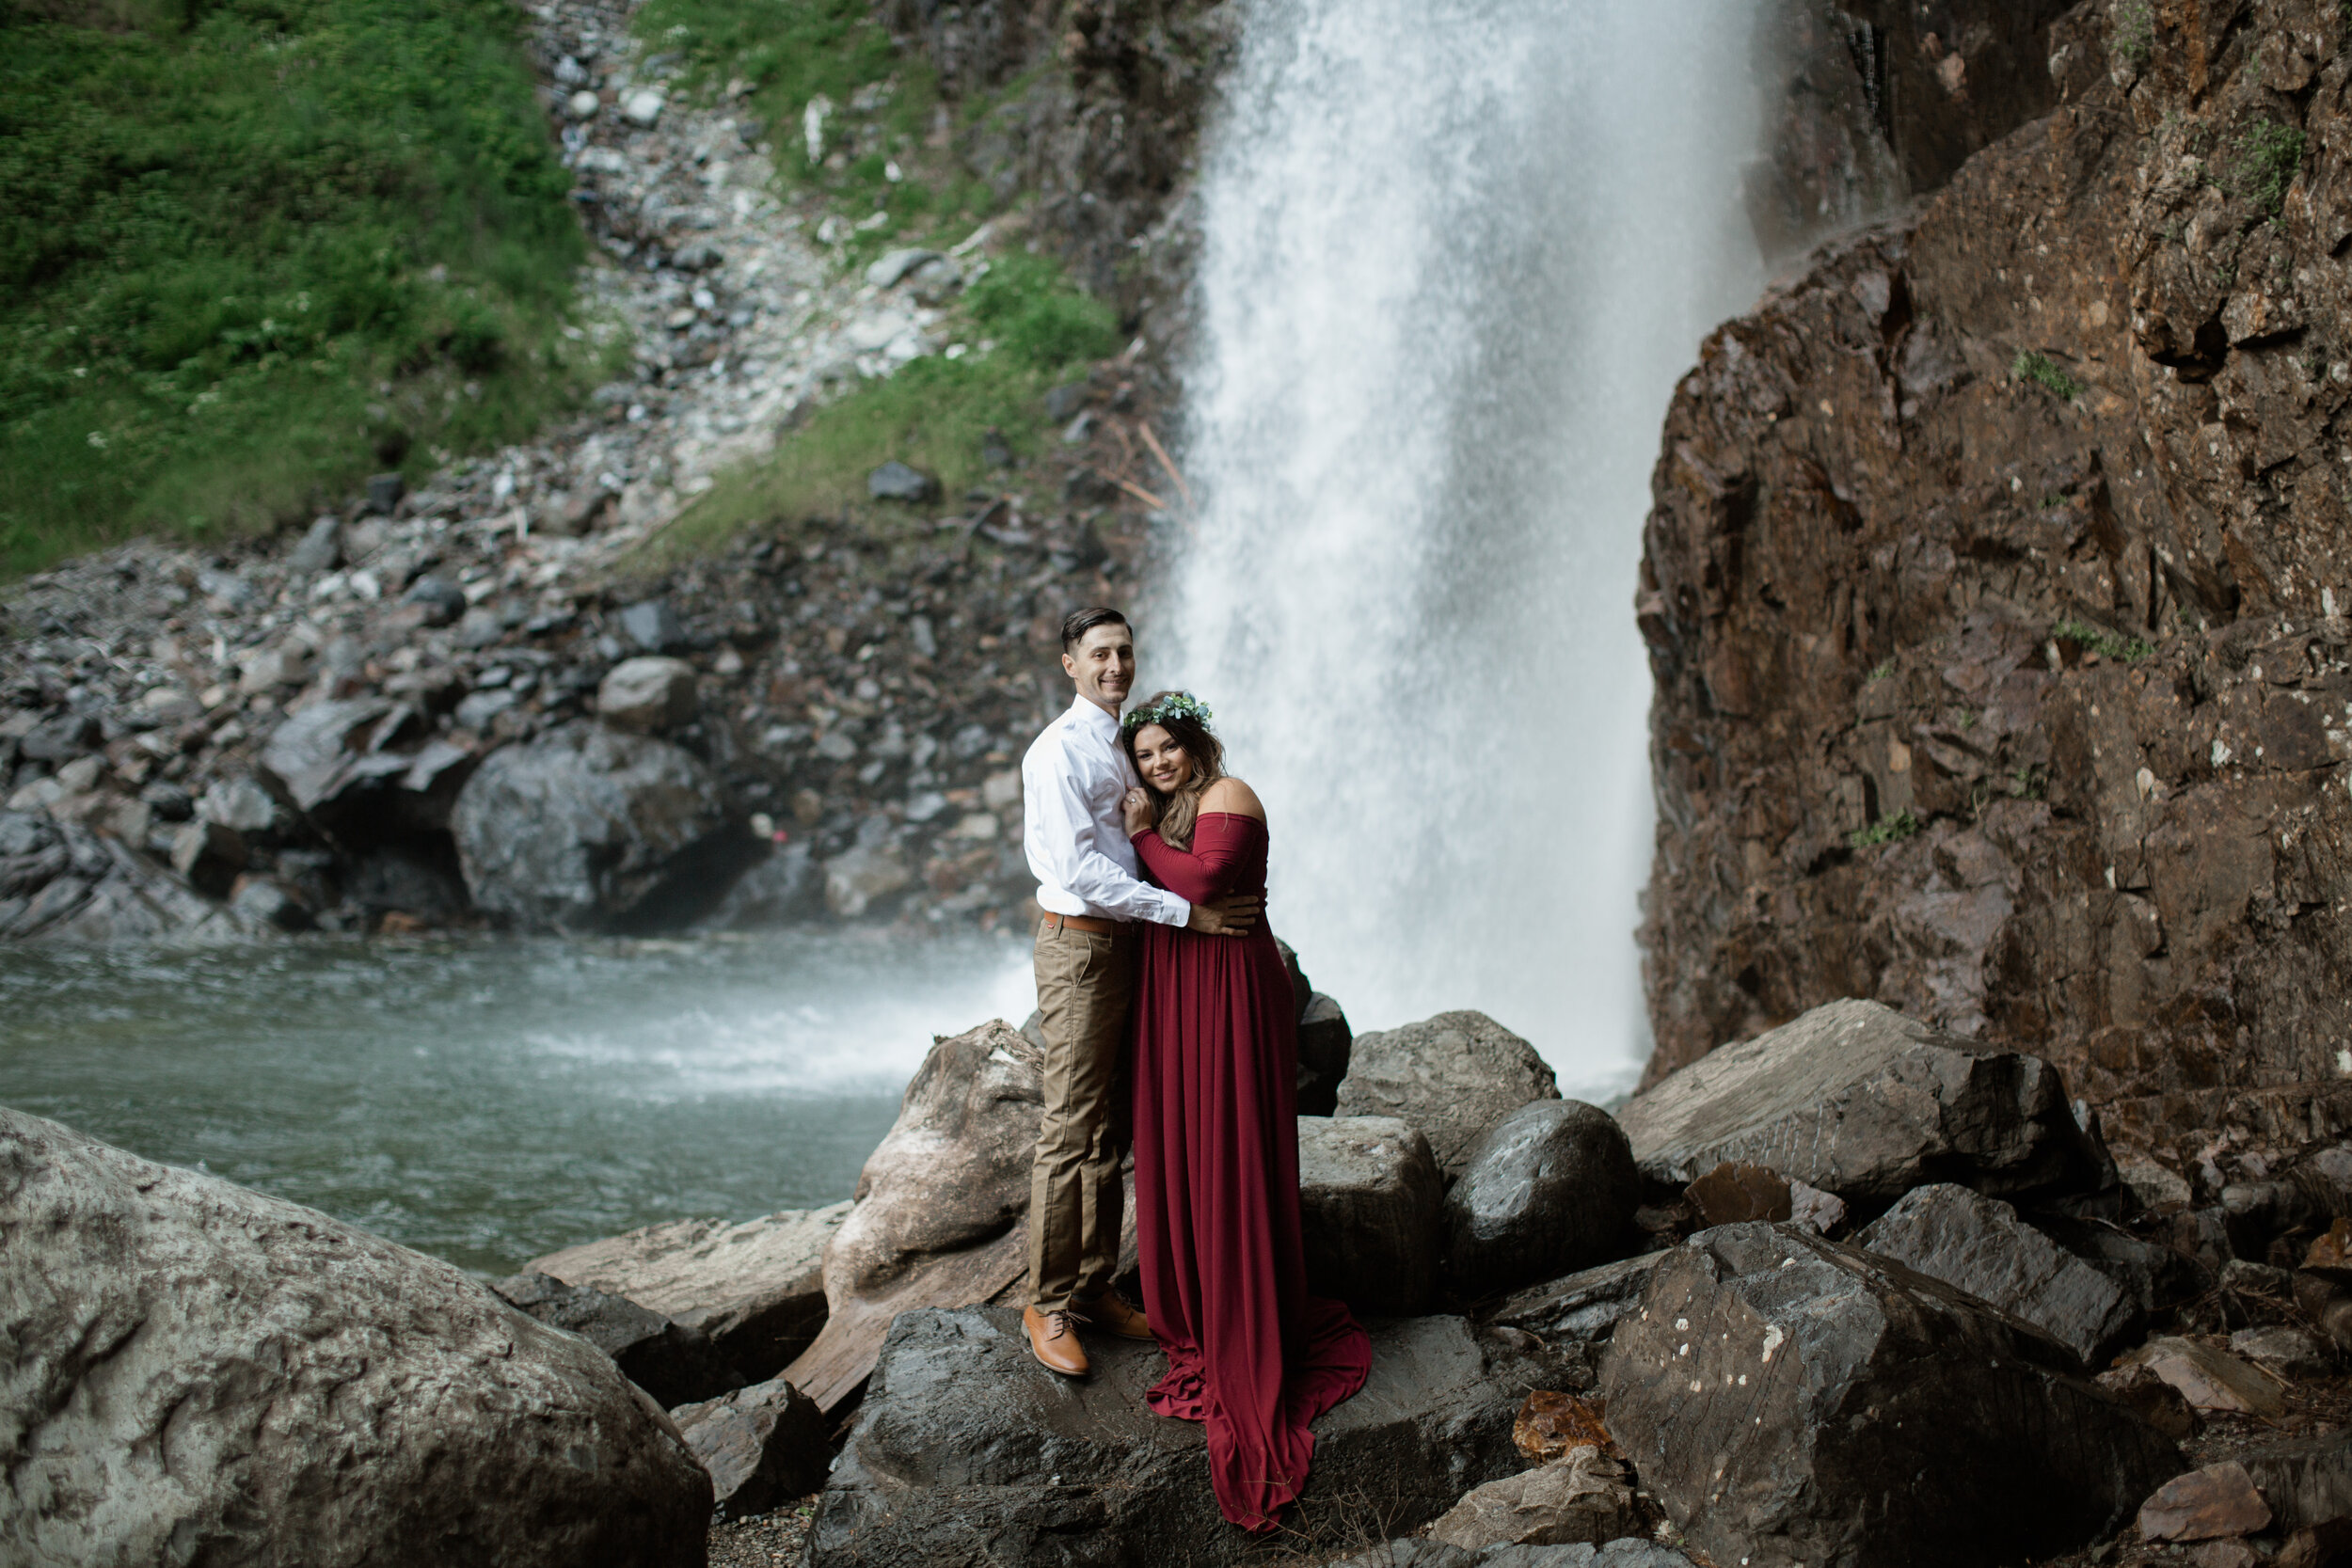 nicole-daacke-photography-gold-creek-pond-franklin-falls-waterfall-summer-adventure-engagement-session-elopement-photographer-washington-summer-engagement-photos-snoqualmie-pass-114.jpg